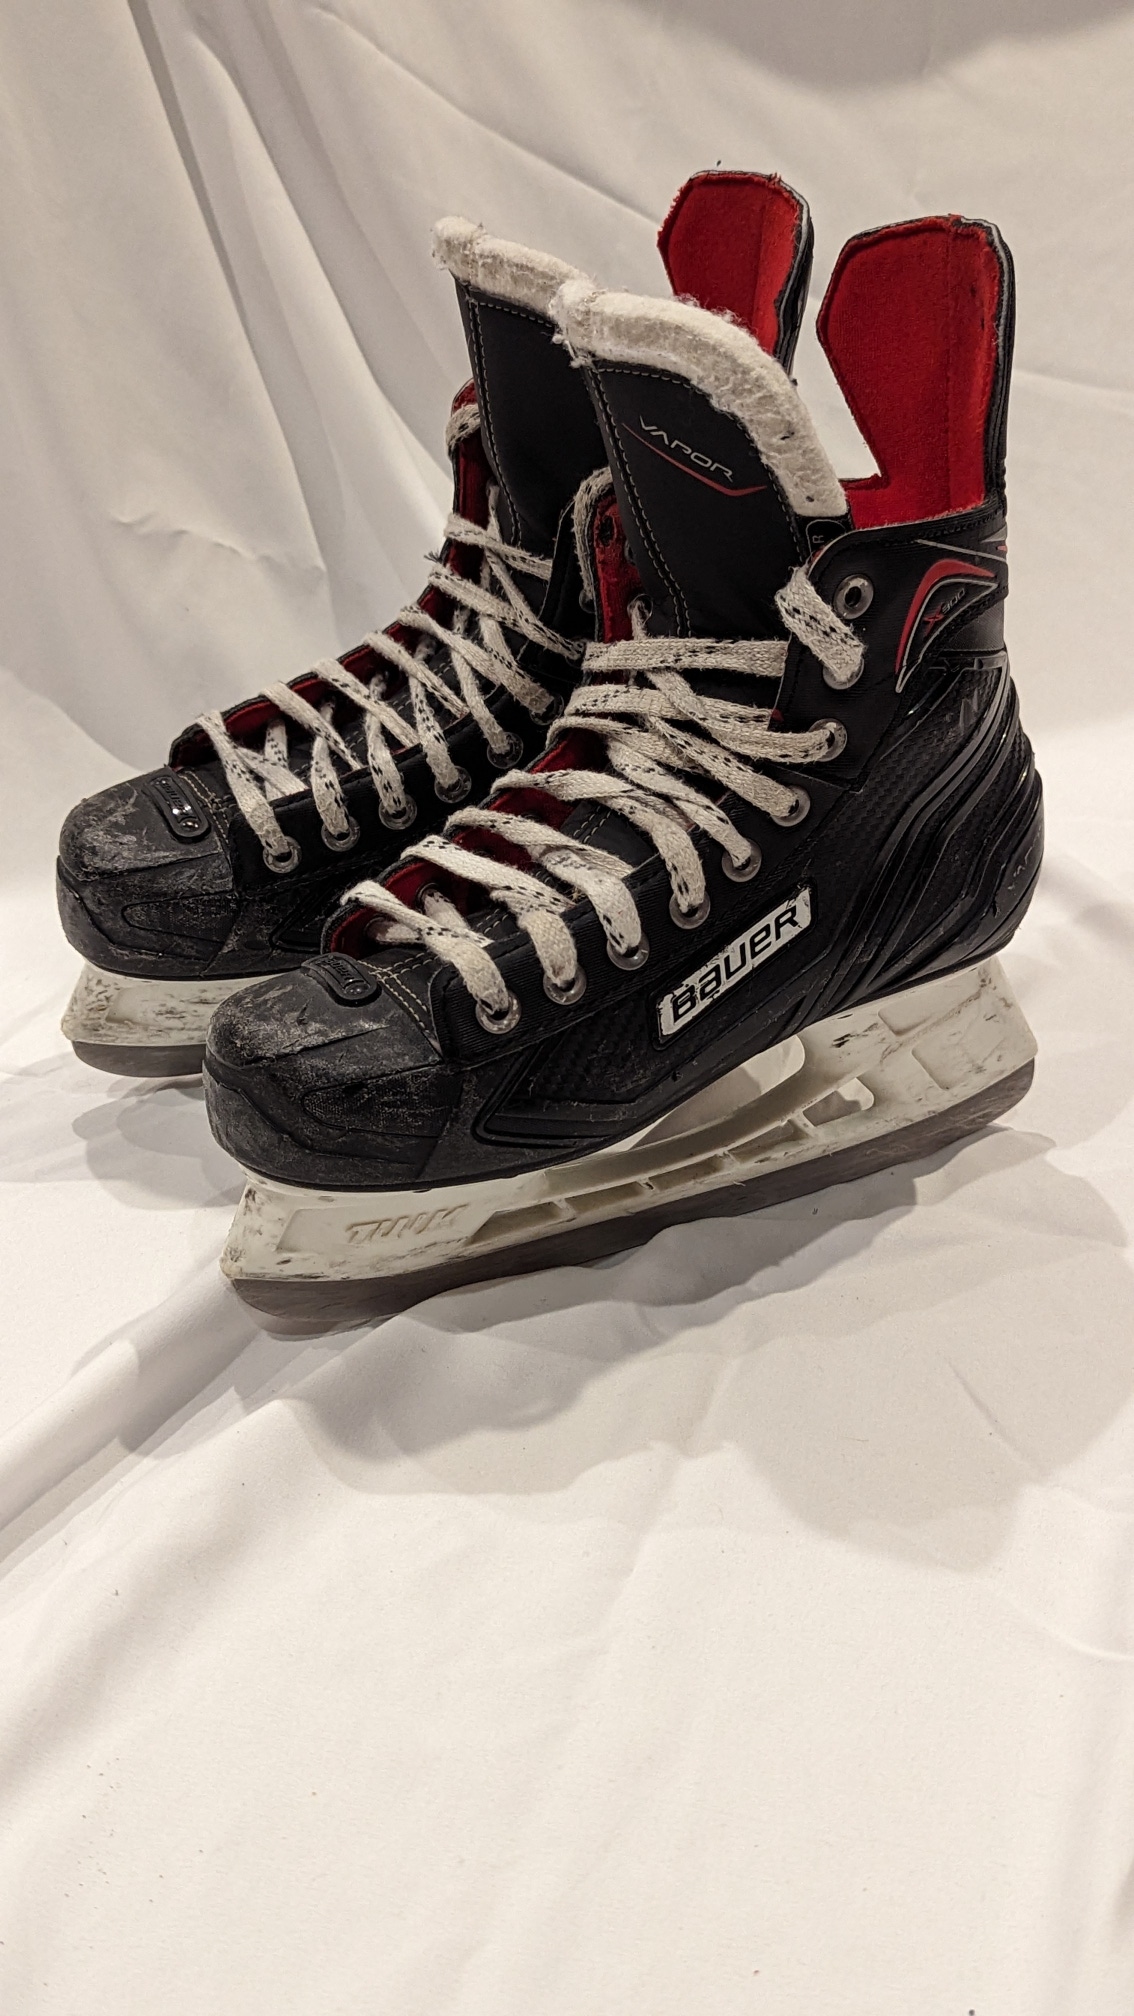 Bauer Vapor X300 Hockey Skates Regular Width Size 5